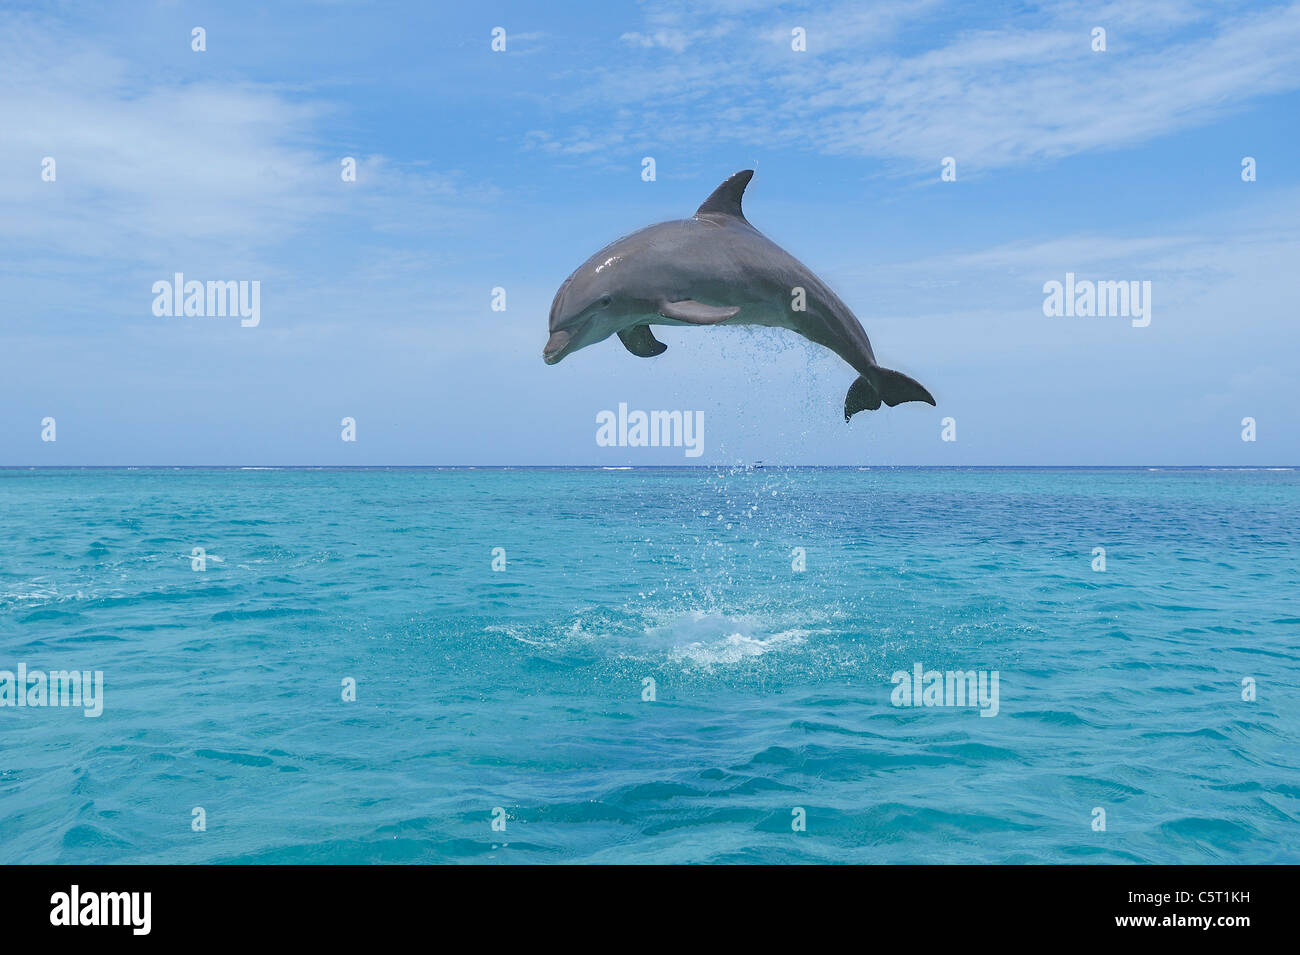 Latin America, Honduras, Bay Islands Department, Roatan, Caribbean Sea, View of bottlenose dolphin jumping in seawater Stock Photo